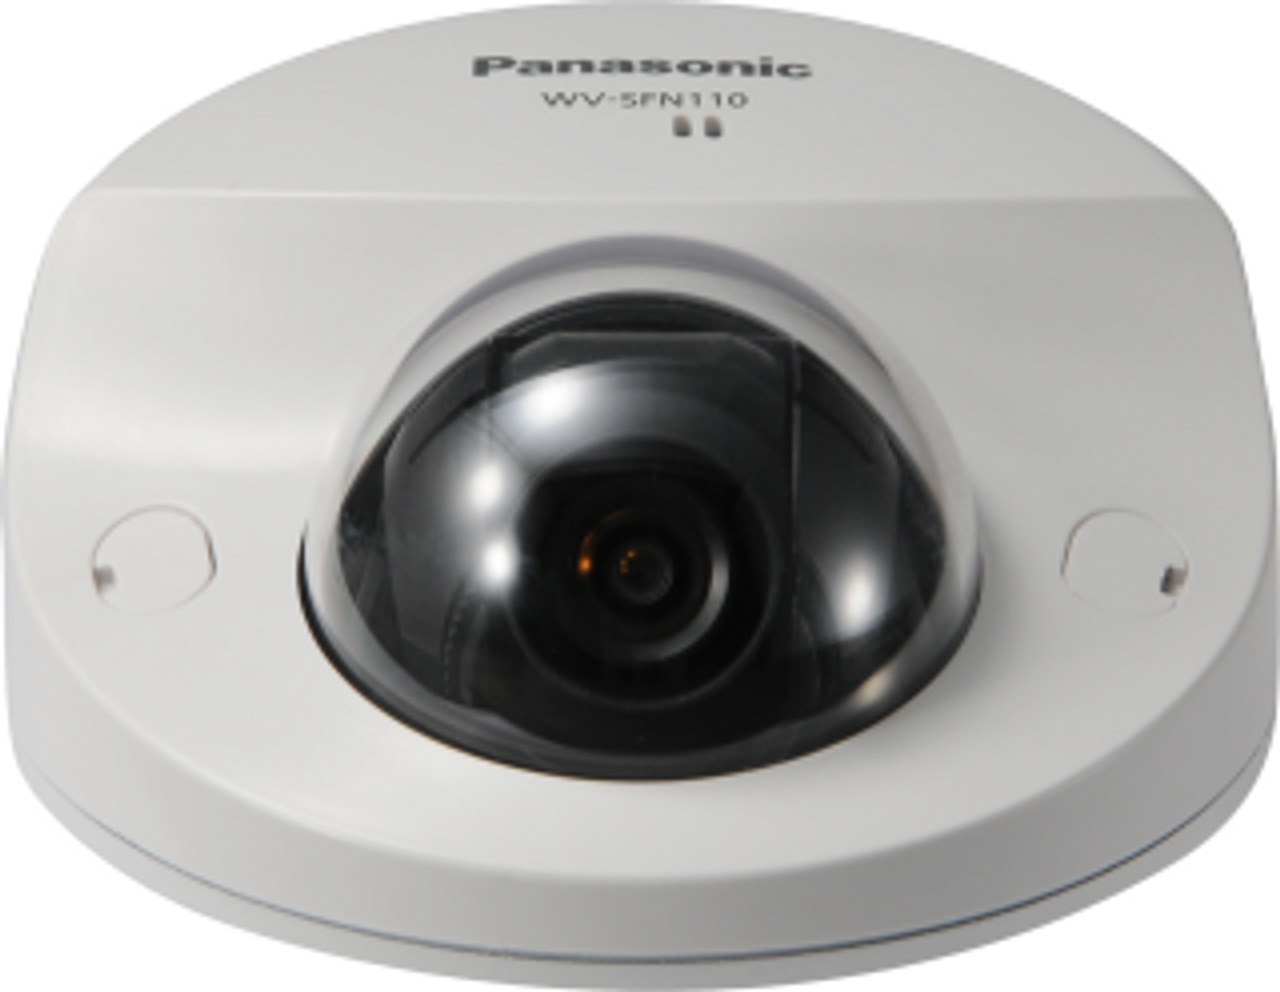 Panasonic WV-SFN110 Indoor Dome IP Security Camera